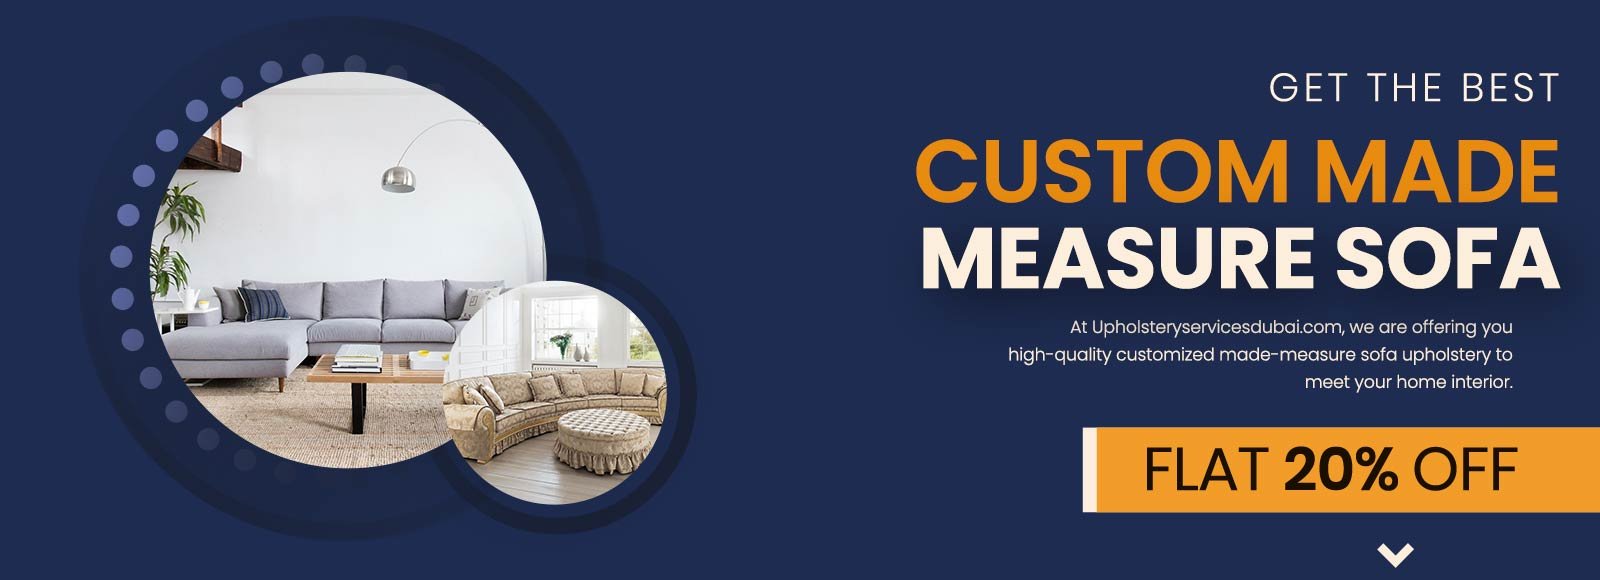 Custom-made-measure-sofa